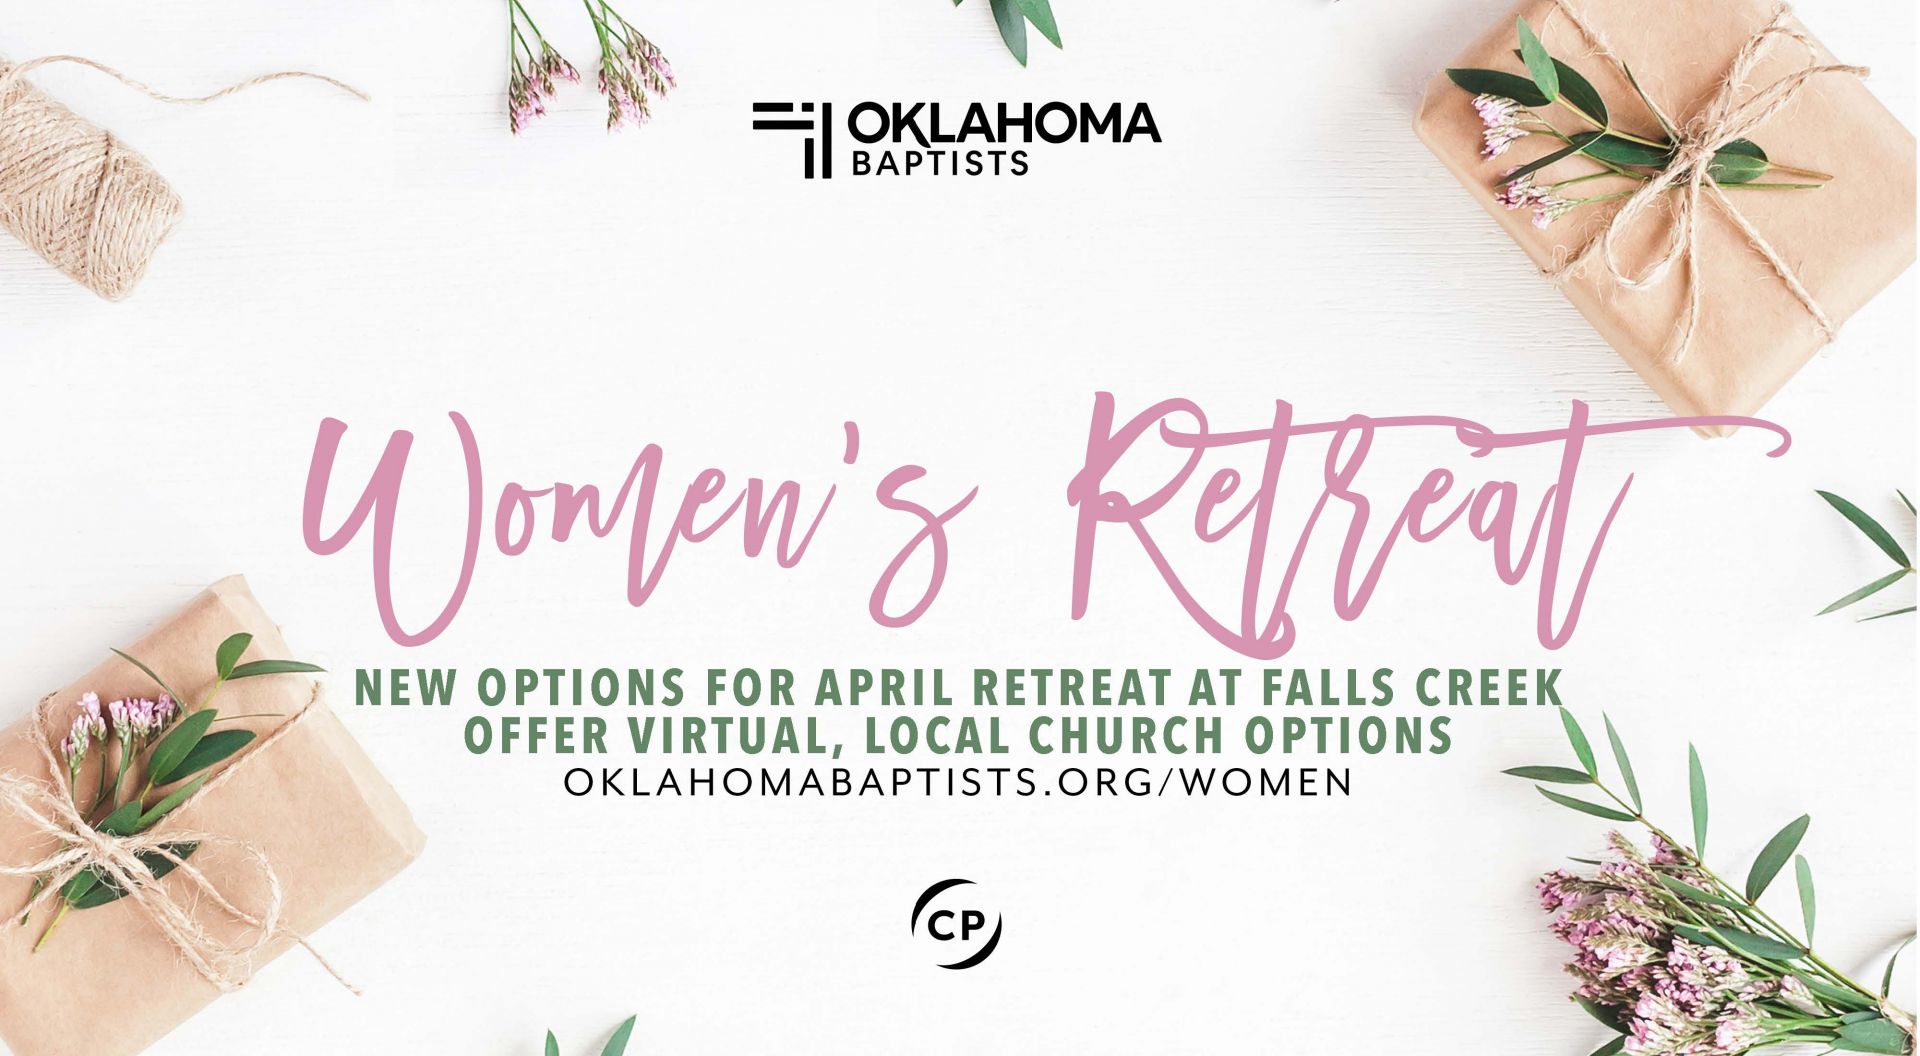 Oklahoma Baptists’ Women’s Retreat 2021 New options for April retreat